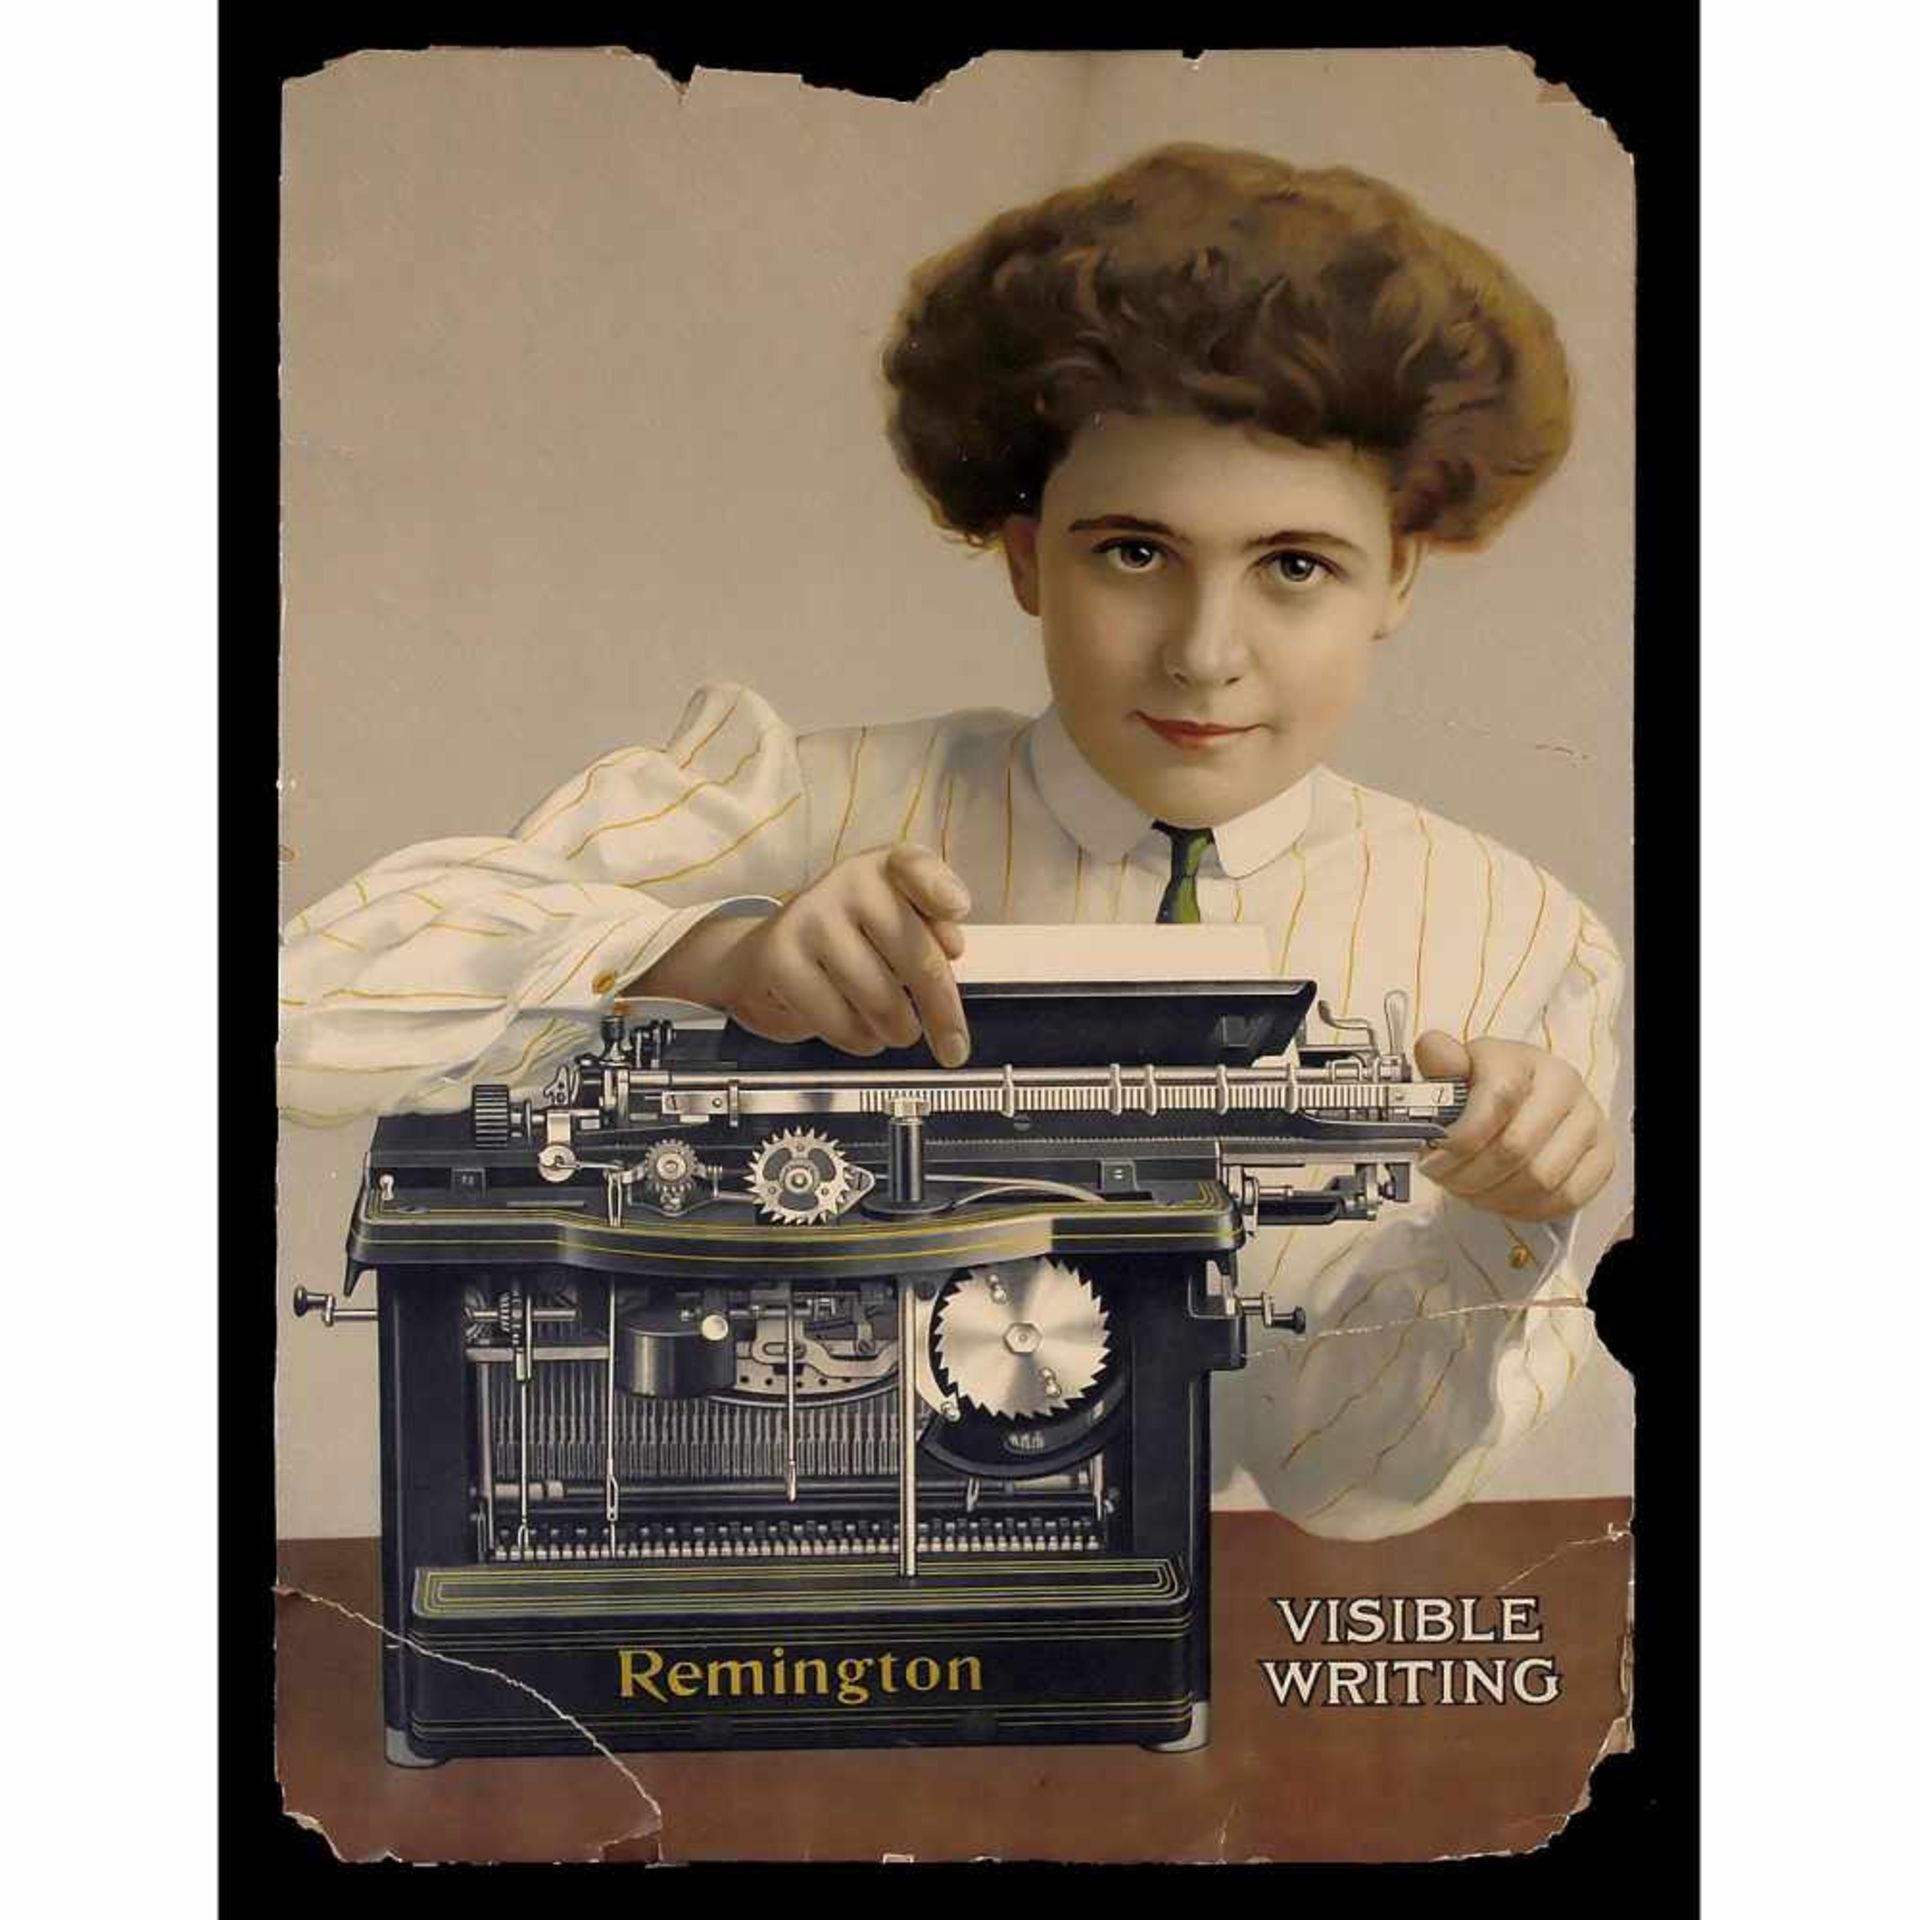 Office Machine Posters and Advertisements, c. 1900-50 - Bild 5 aus 5